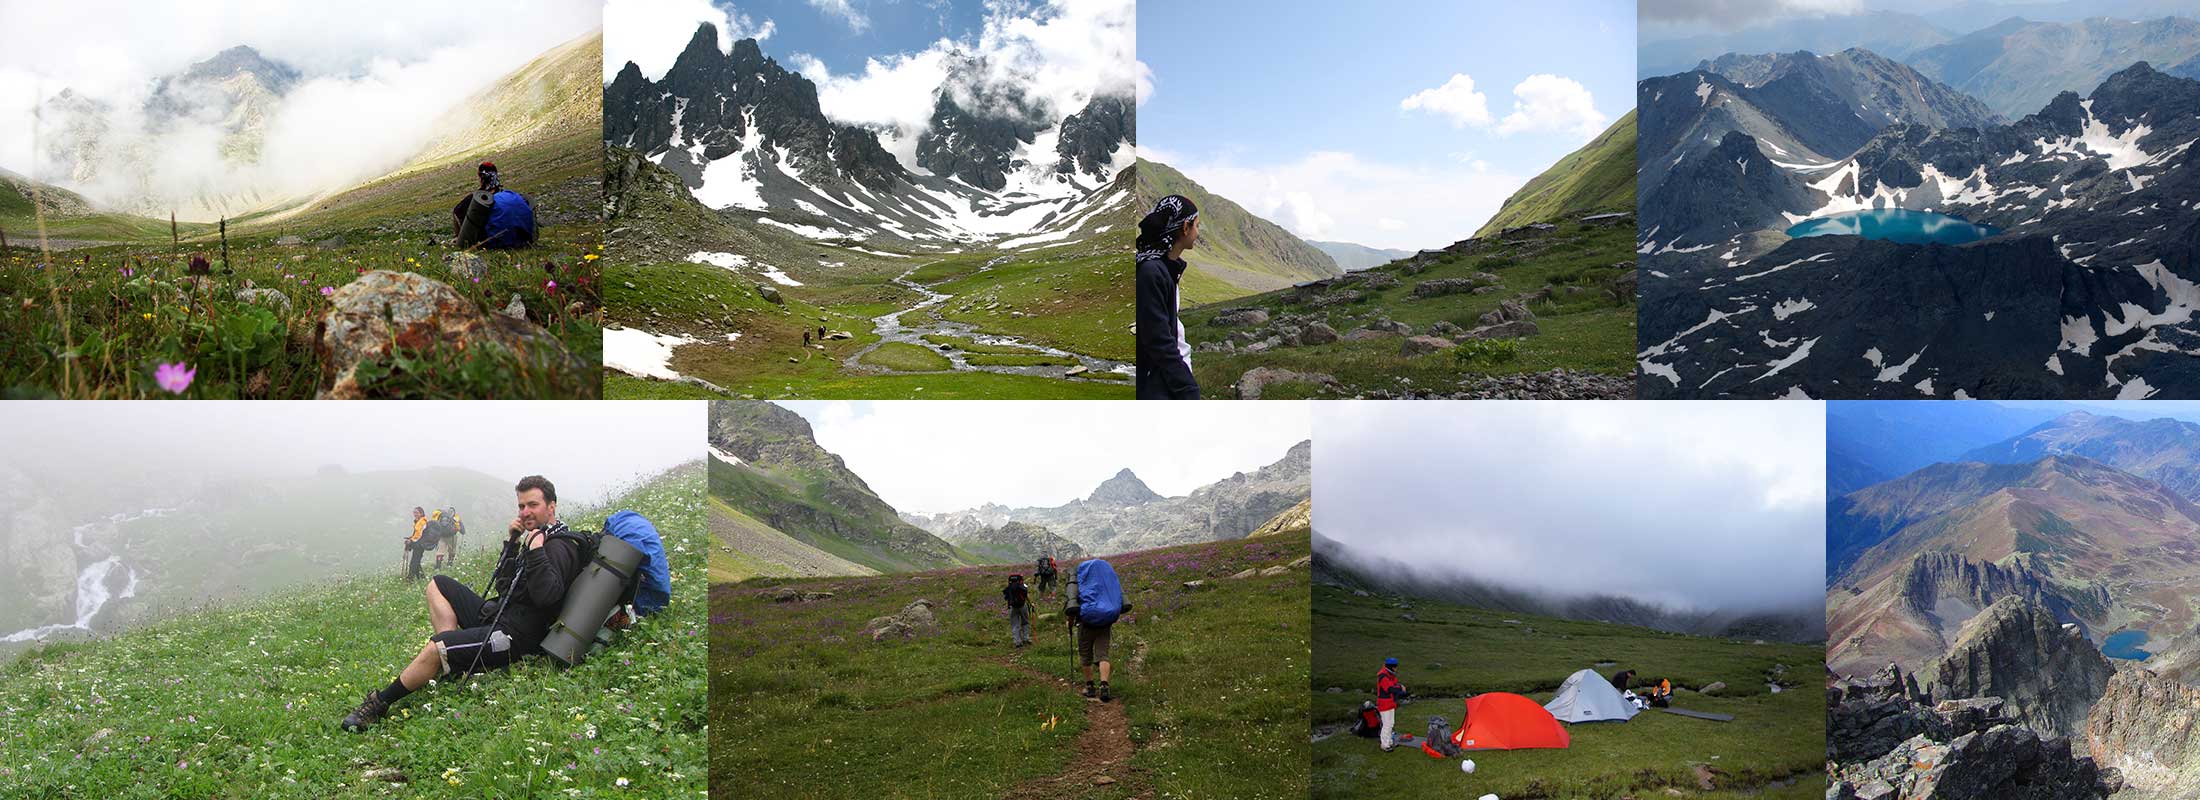 mountaineering-8-DAYS-MOUNT-KACKAR-EXPEDITION-TREKKING